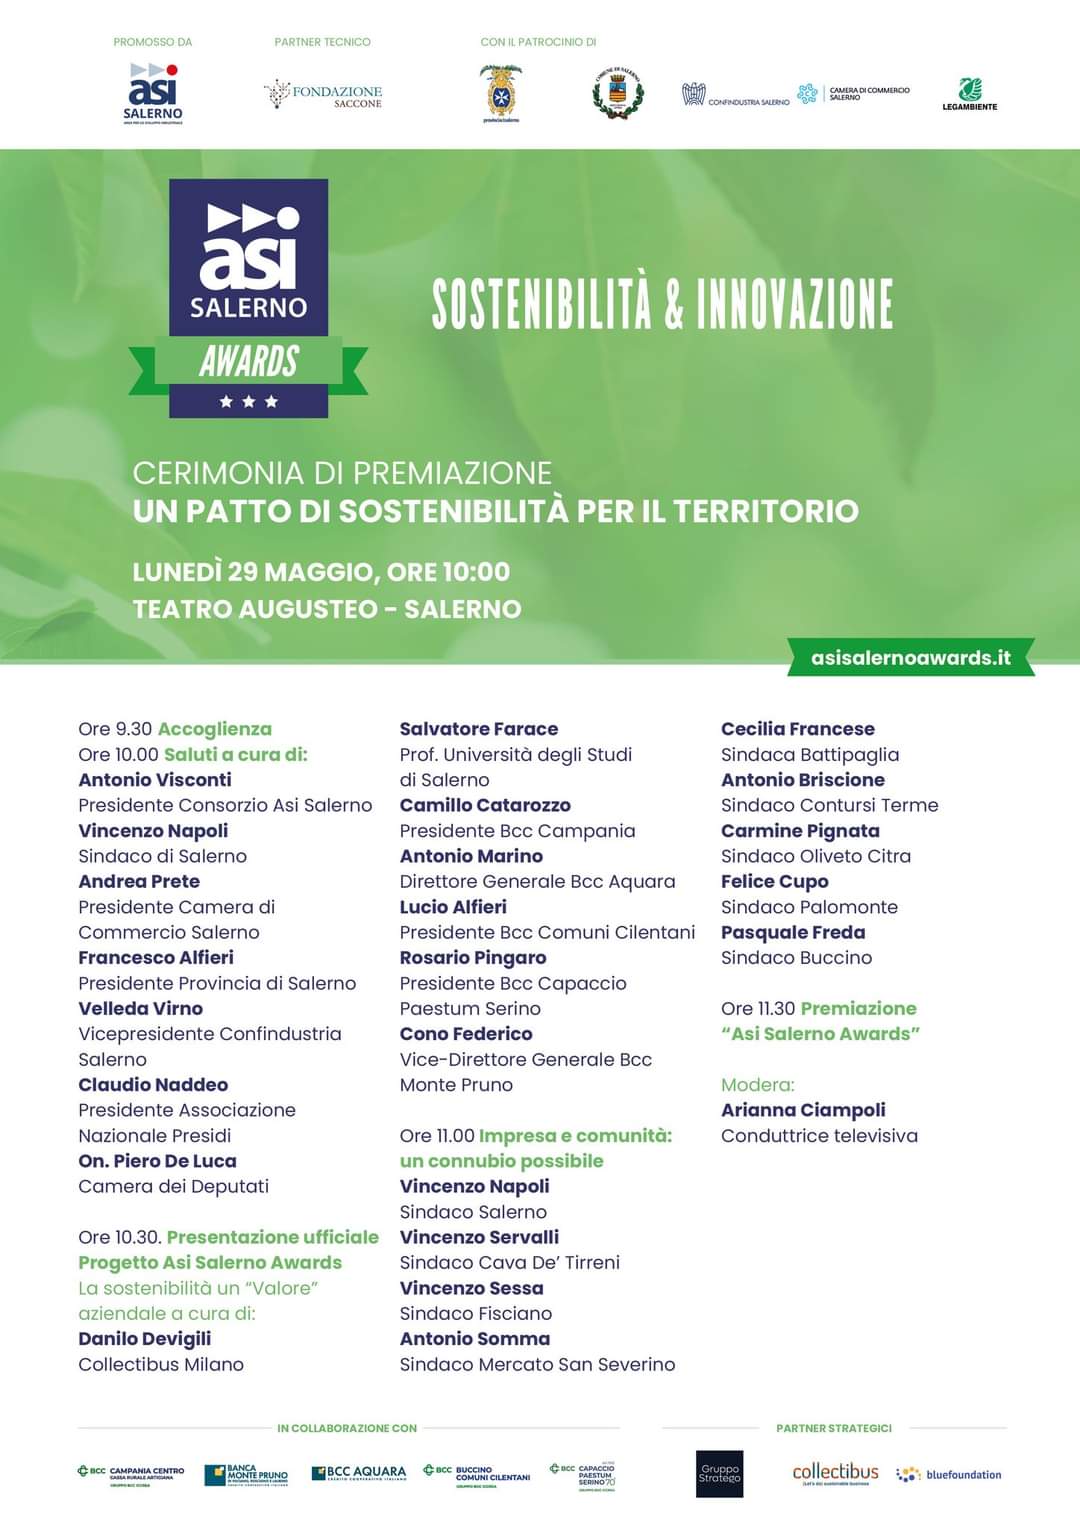 Salerno: ASI Salerno Awards, premiazione a Teatro Augusteo